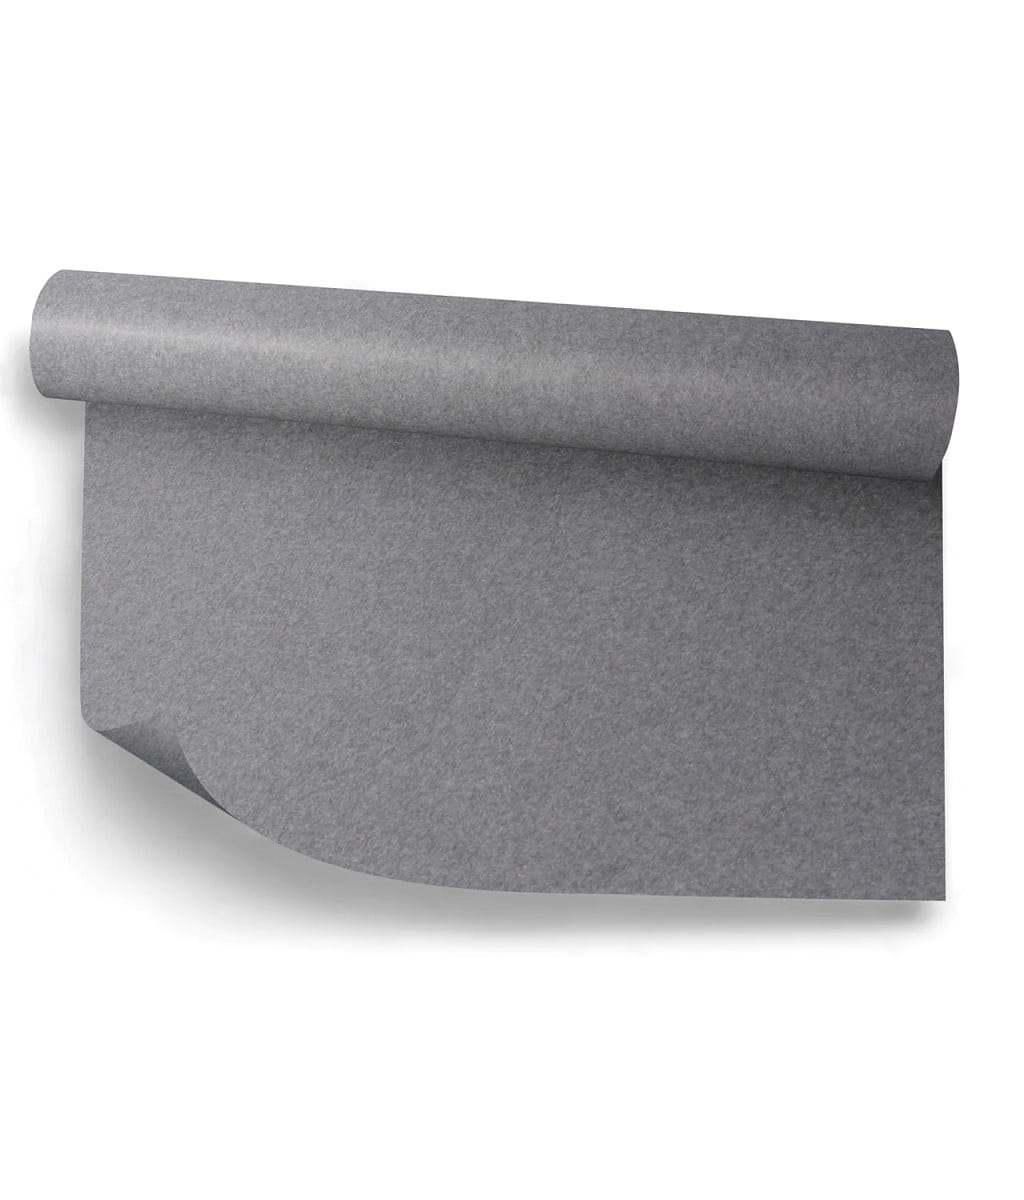 EMF Protection Blanket - Leblok EMF Clothing & Shielding